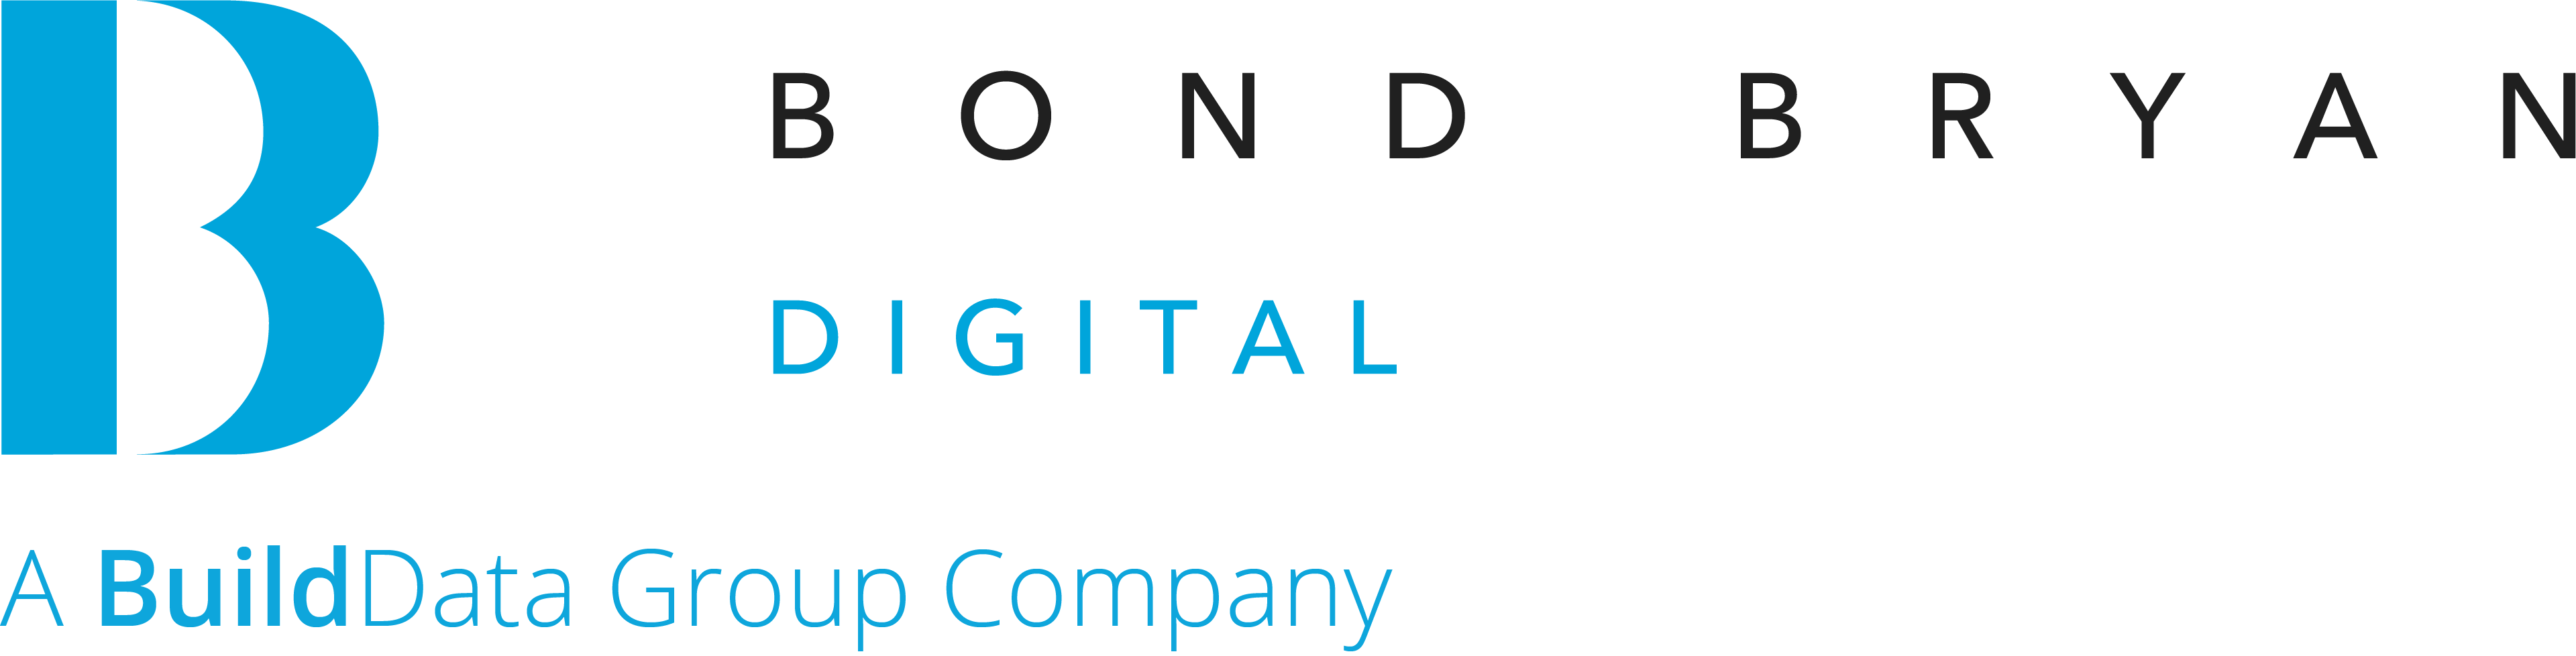 Bond Bryan Digital logo